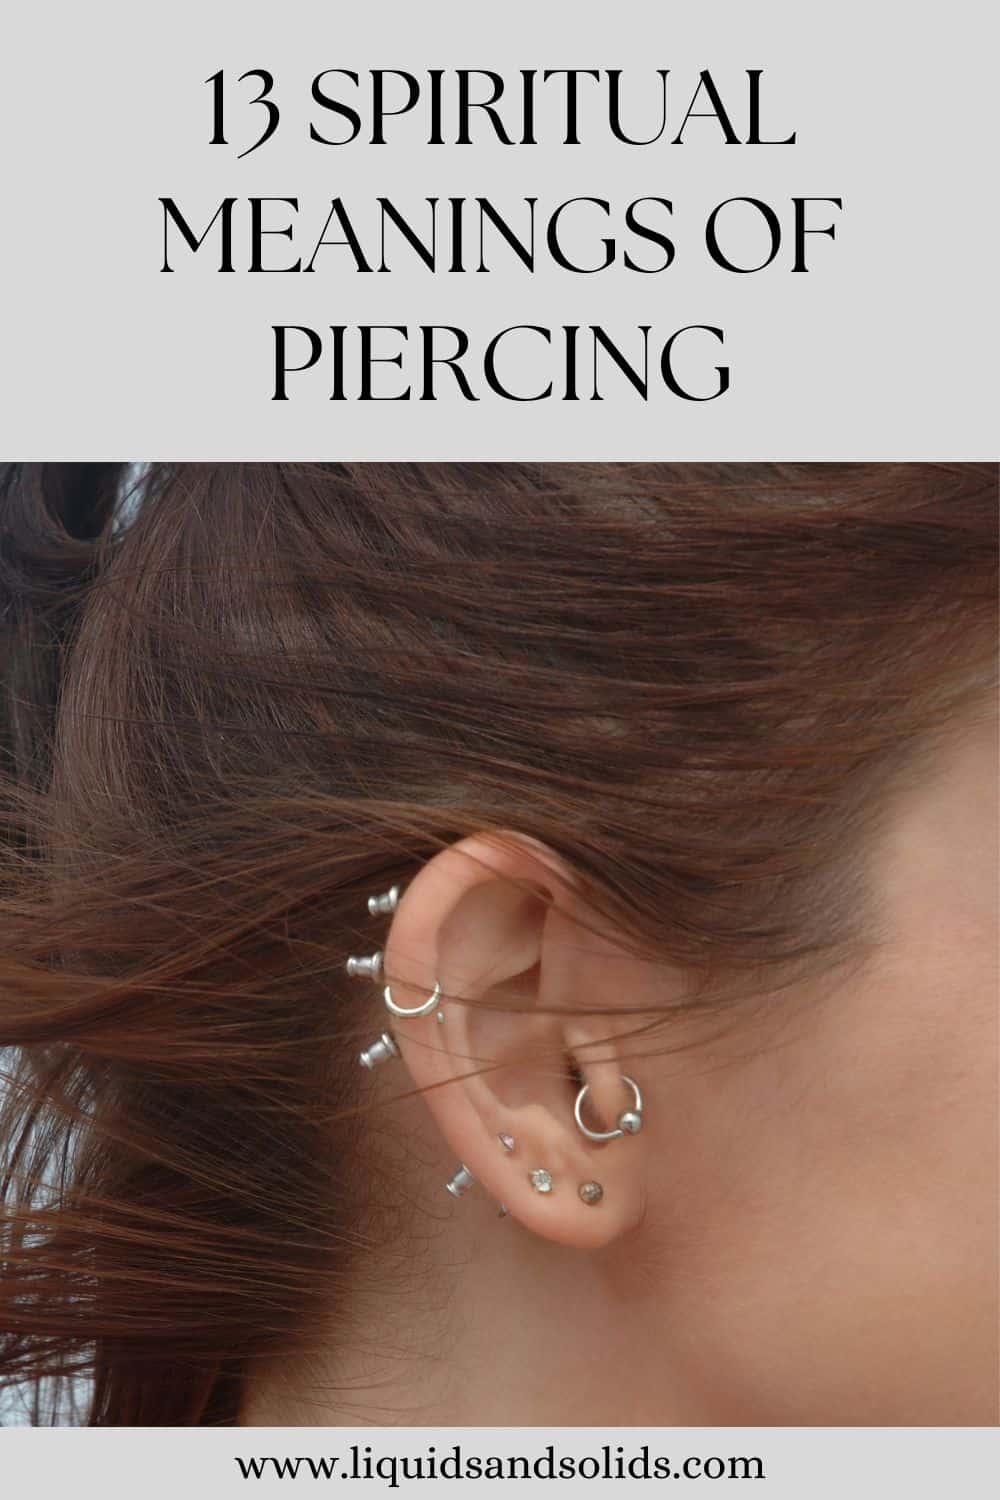 13 Spiritual Meanings of Piercing